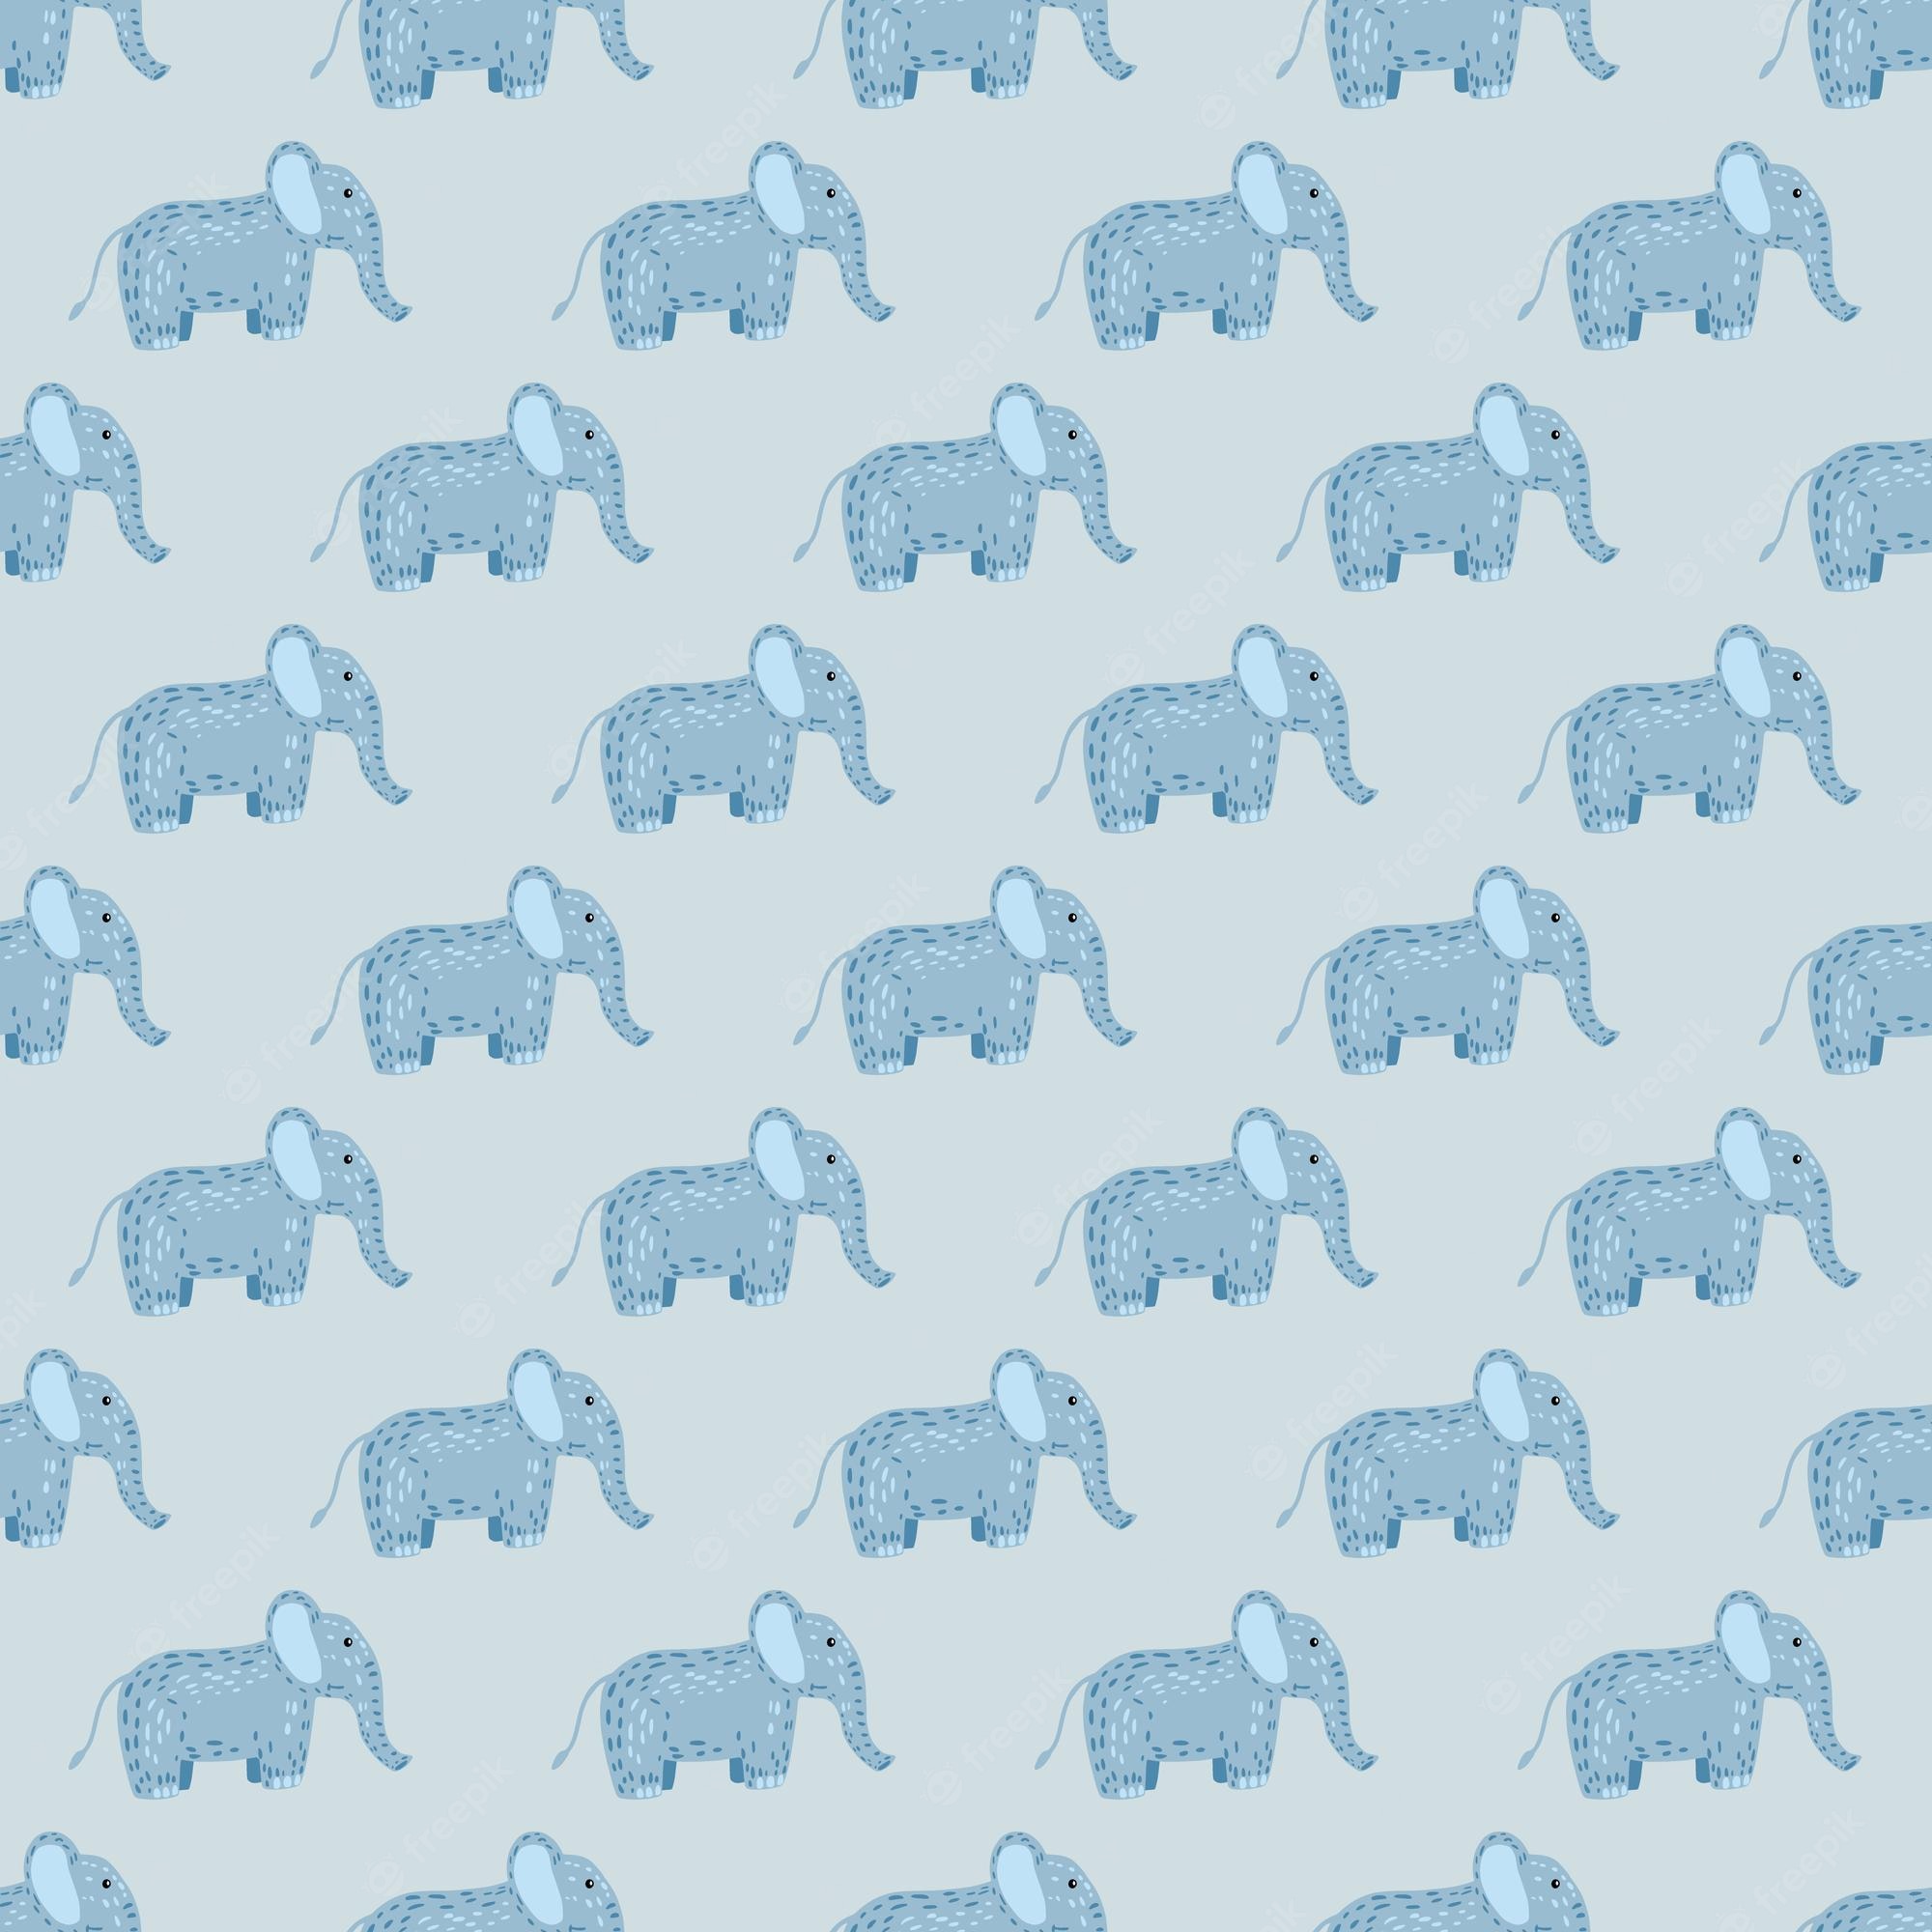 Elephant Wallpaper Image